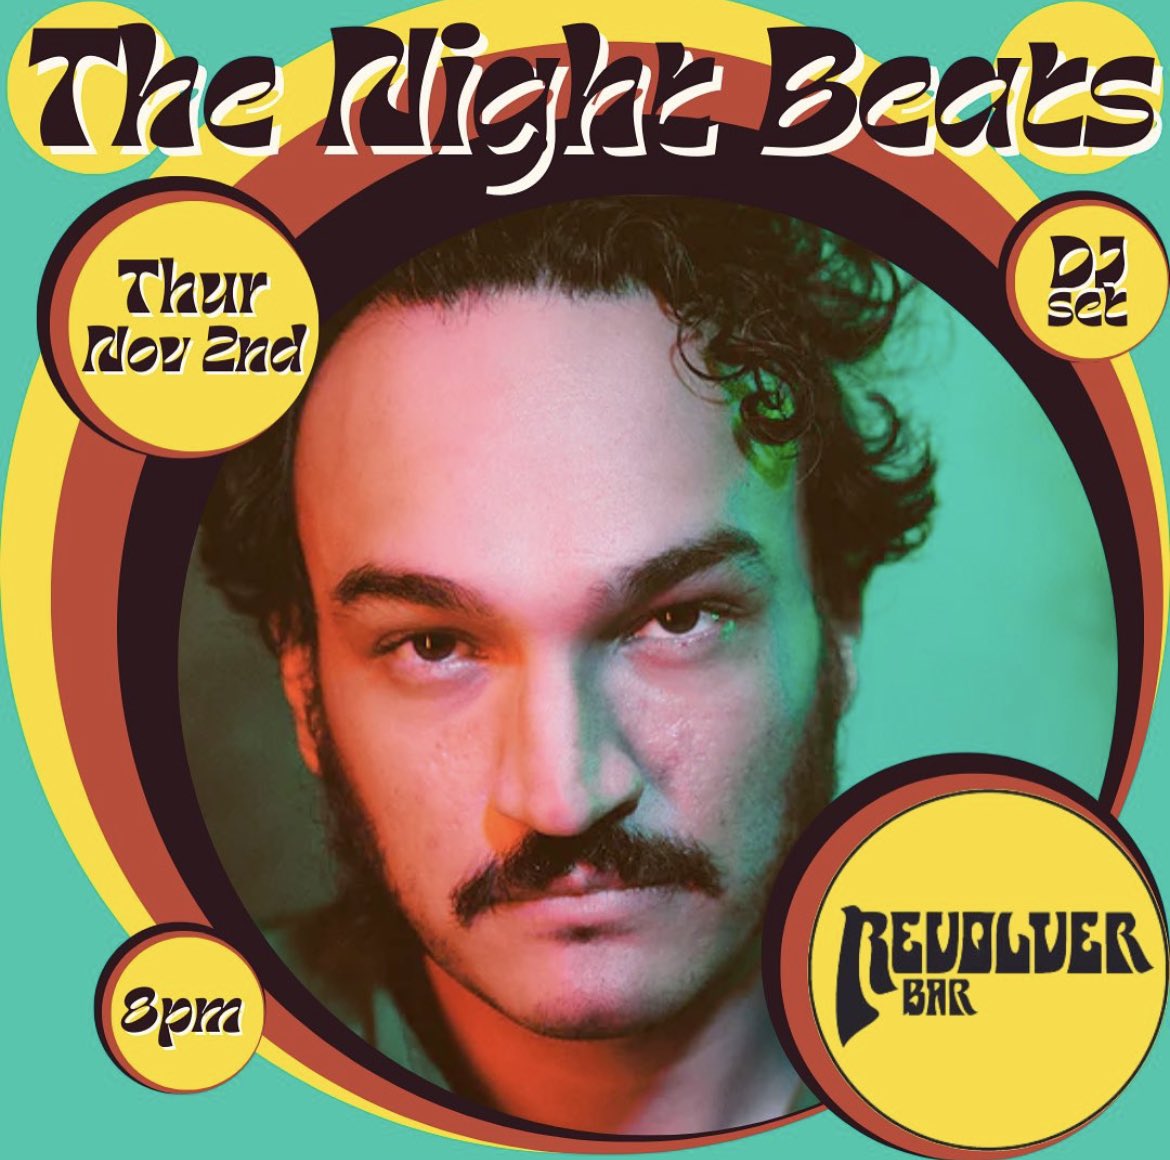 SEATTLE! Catch @thenightbeats FREE DJ set tonight at Revolver Bar 🎧🚀